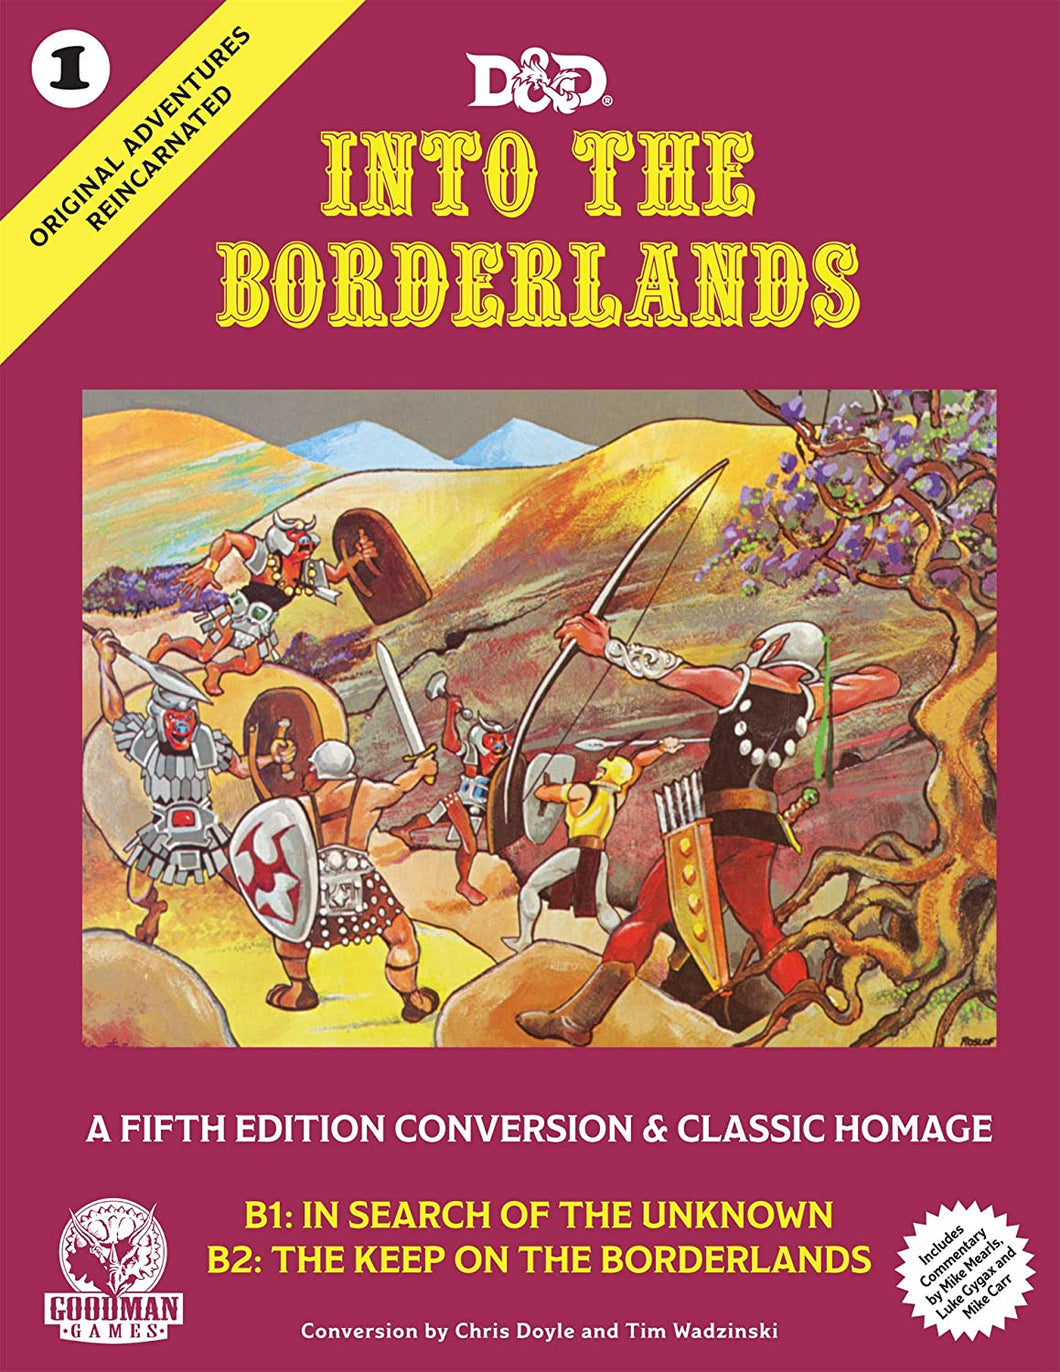 Original Adventures Reincarnated #1 - Into The Borderlands